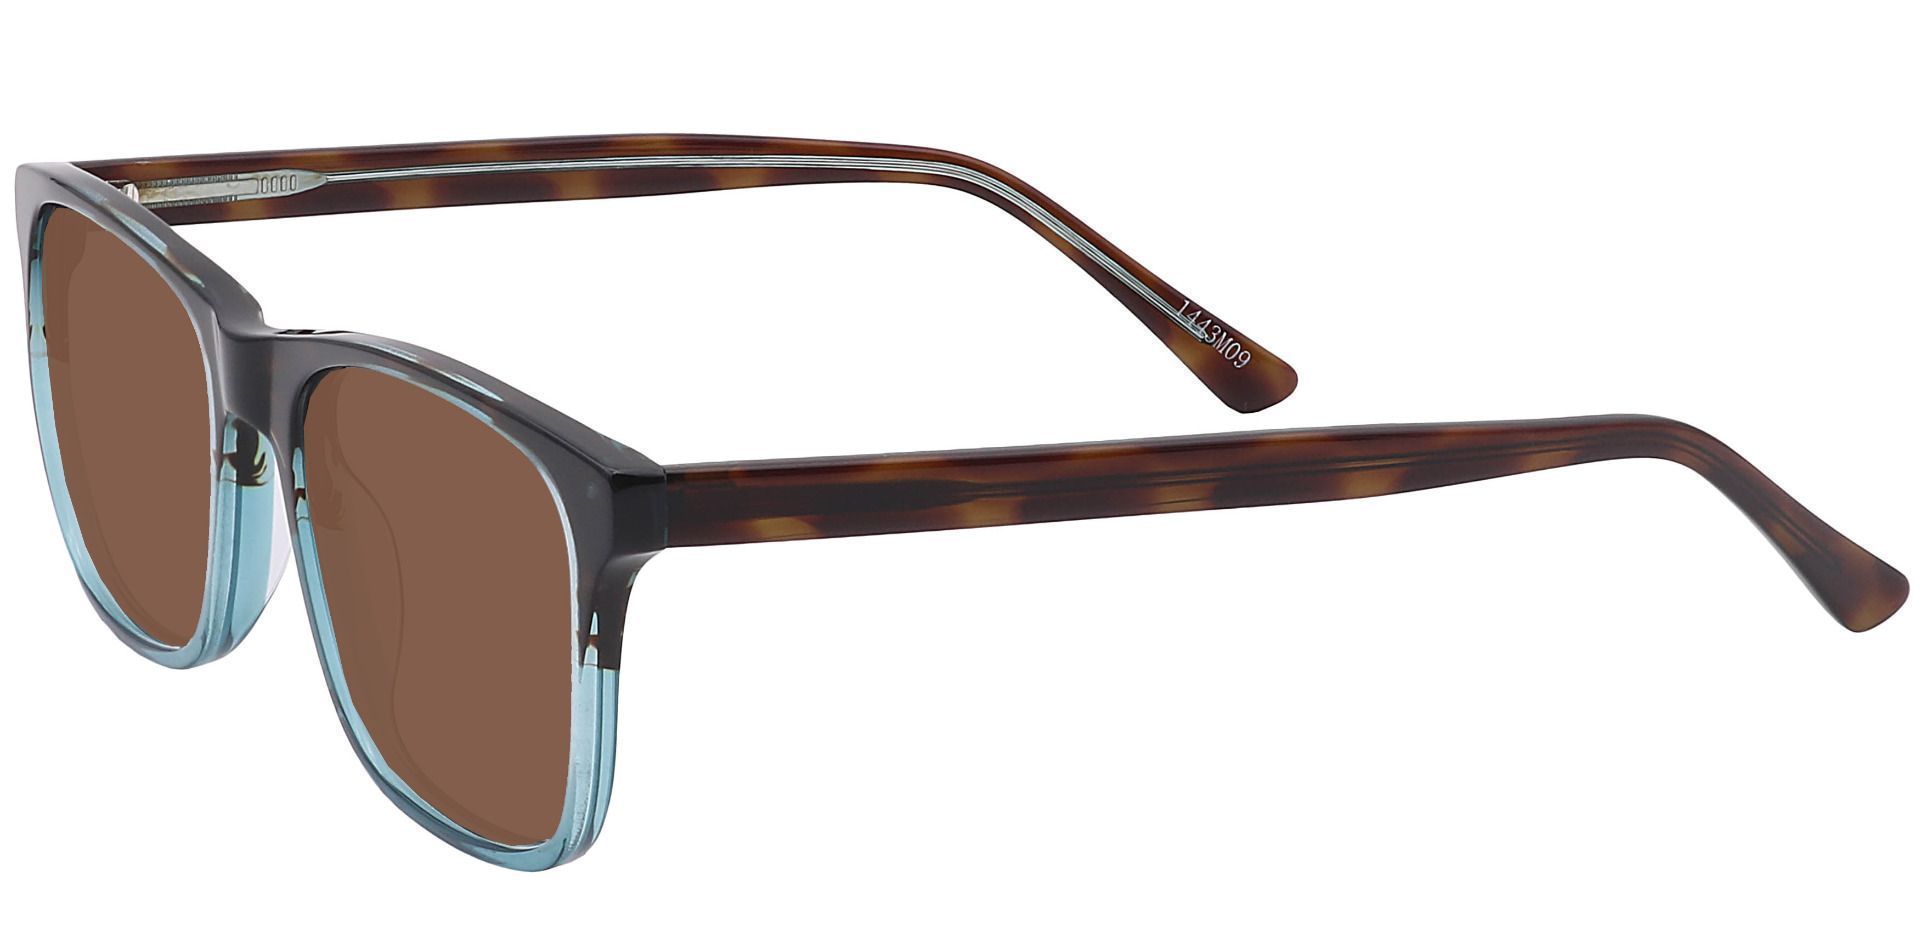 Cantina Square Non-Rx Sunglasses - Multi Color Frame With Brown Lenses